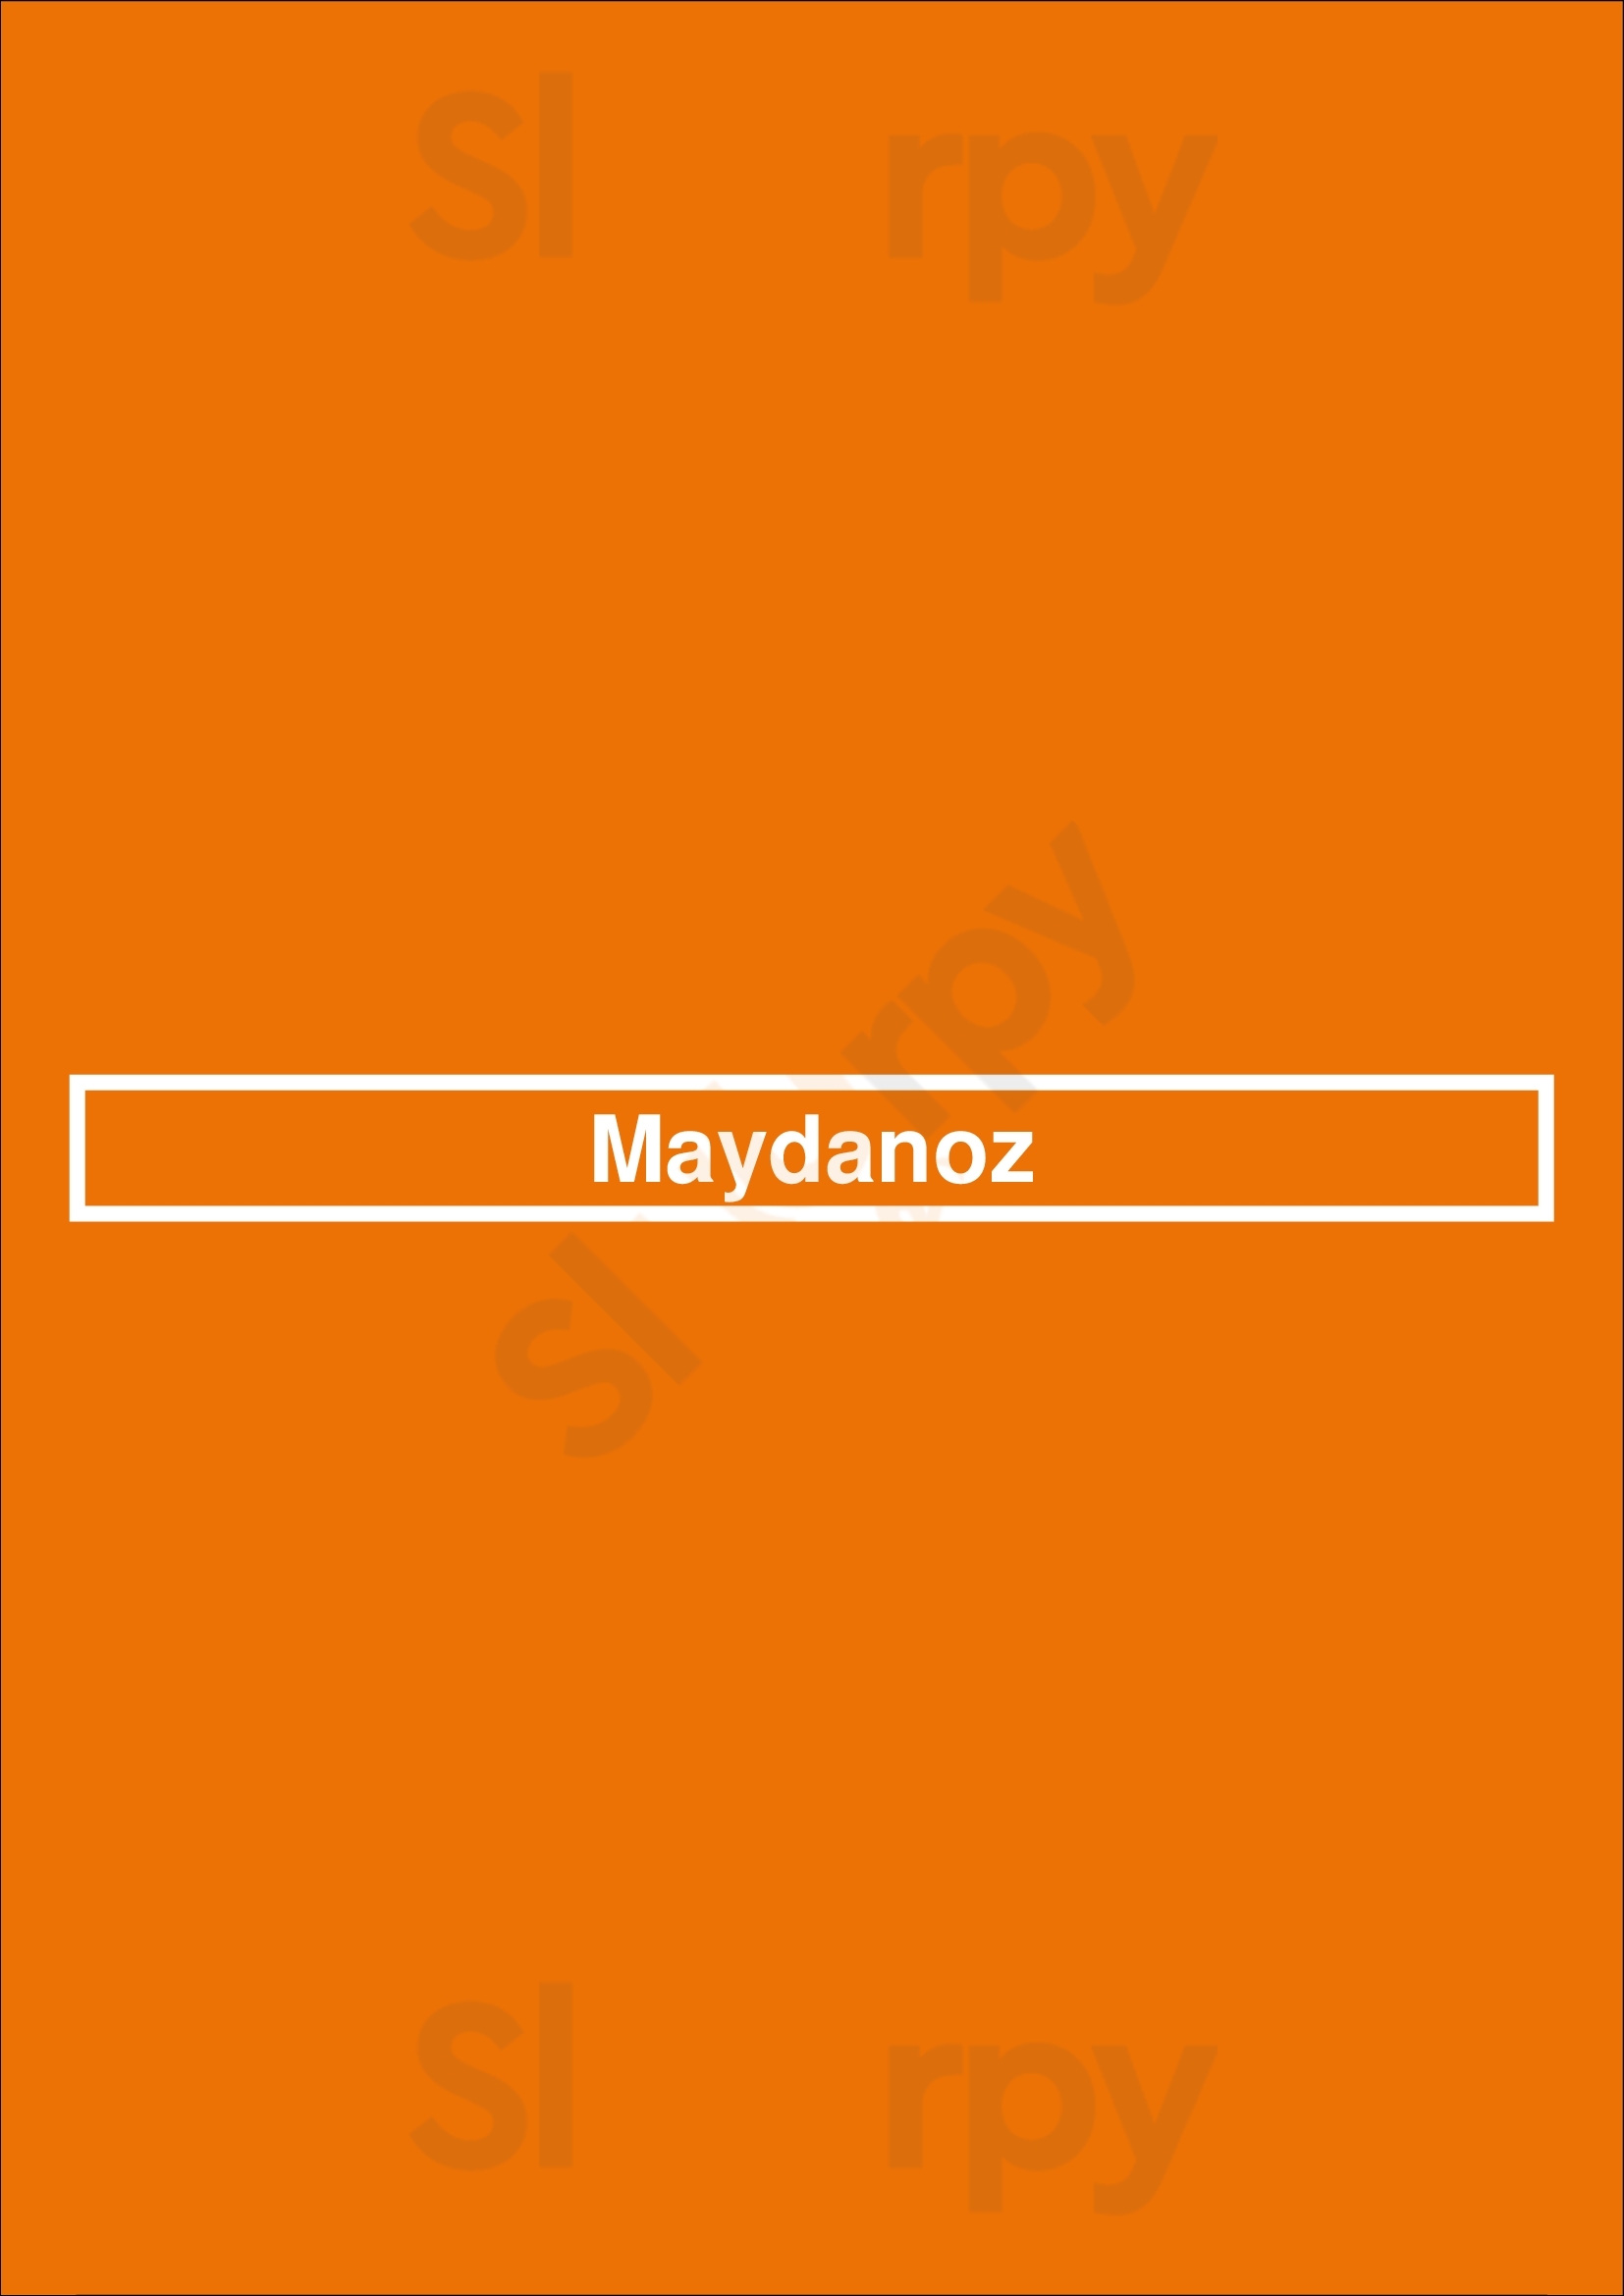 Maydanoz Amsterdam Menu - 1